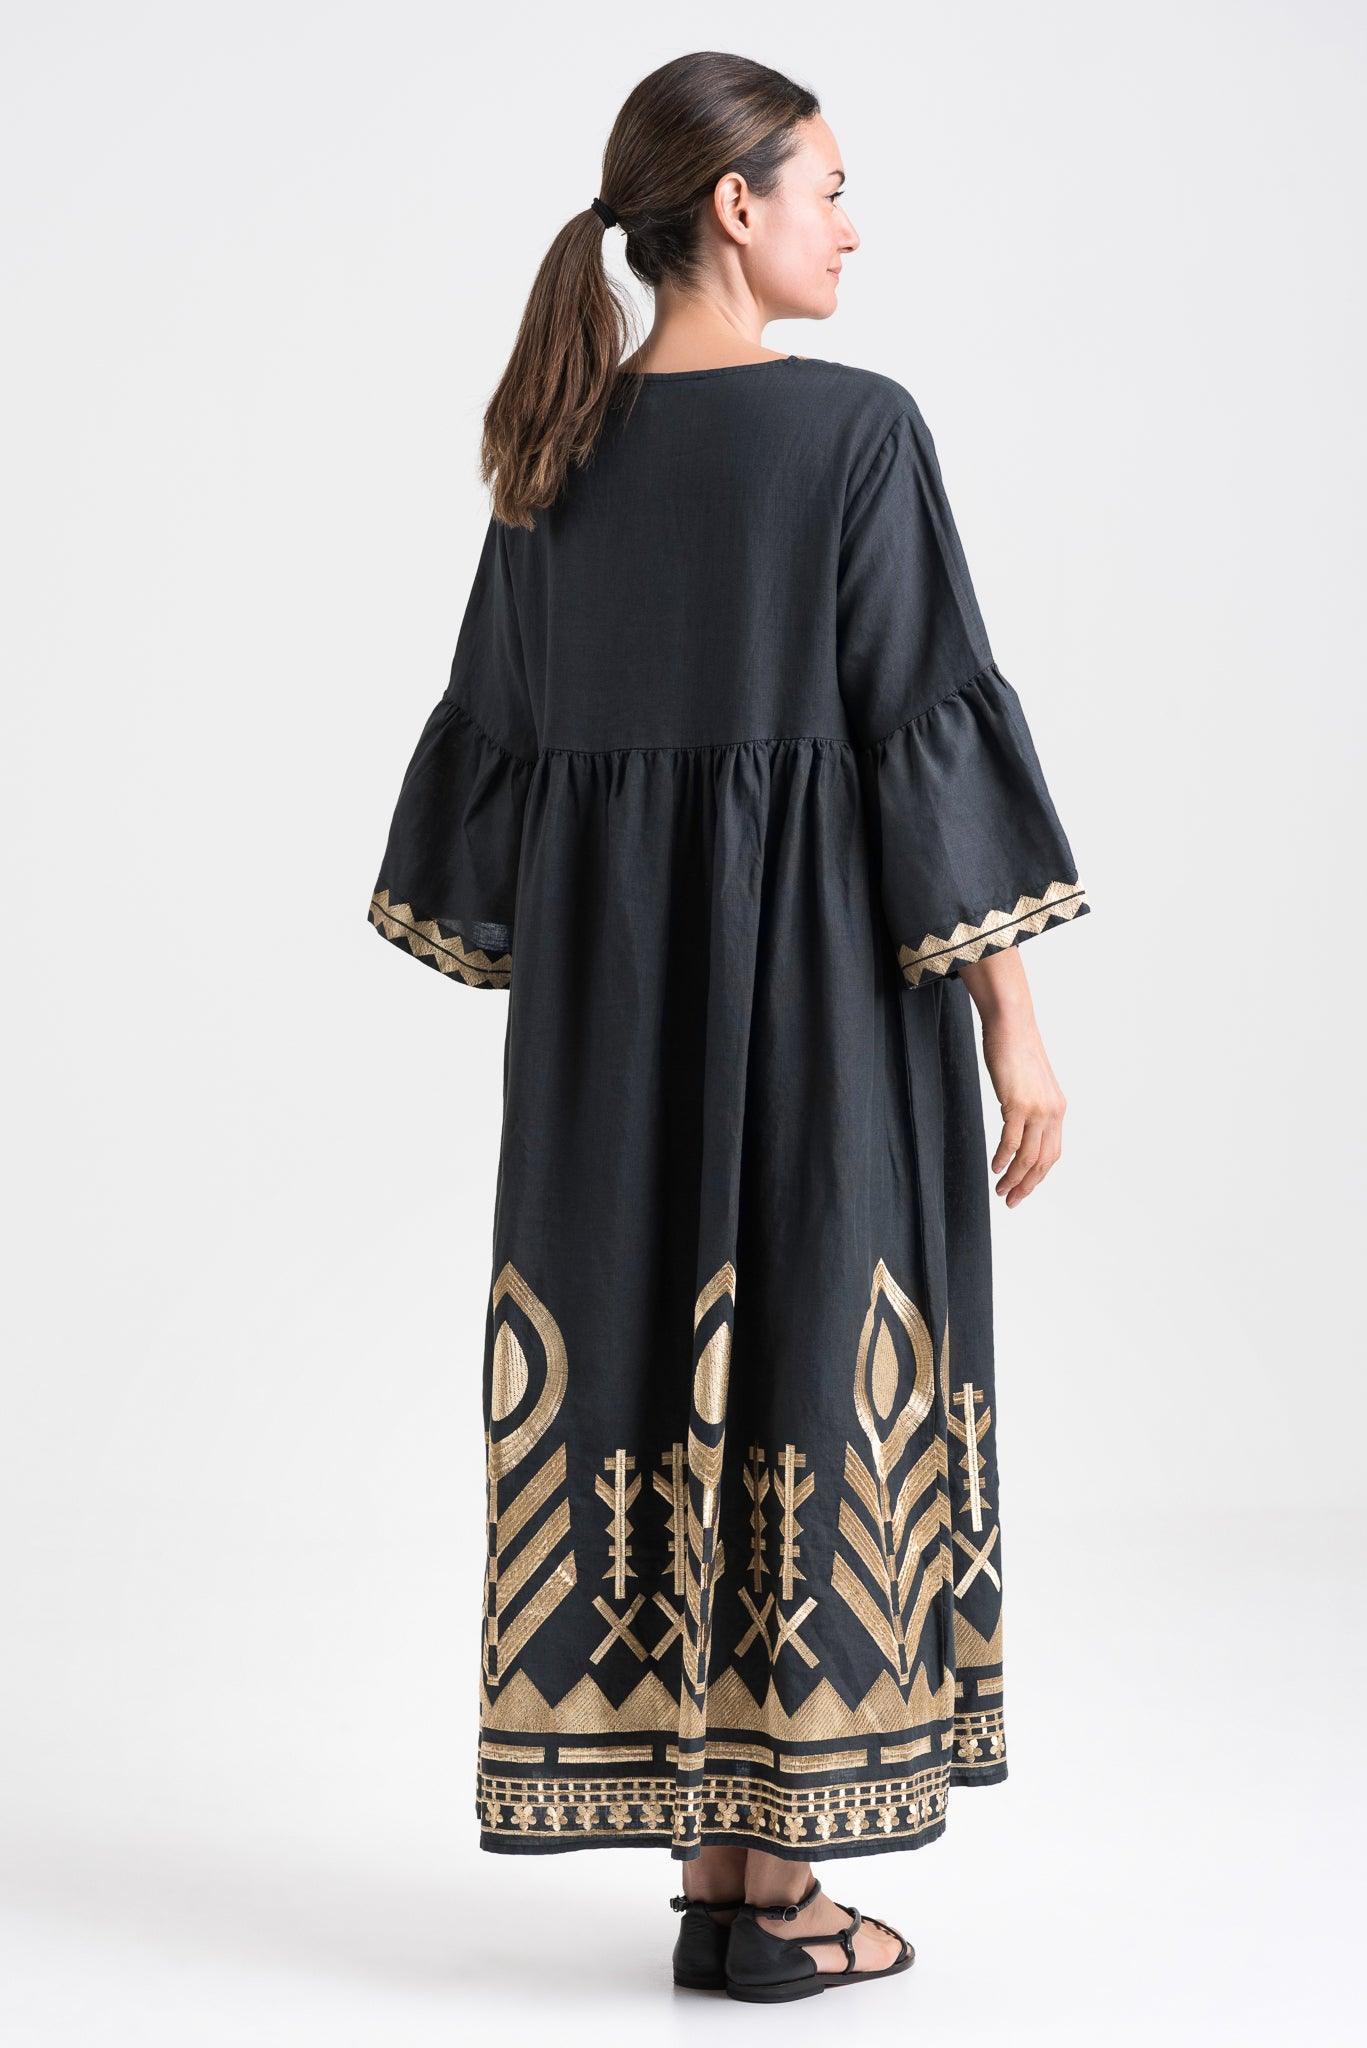 GREEK ARCHAIC KORI | Long linen Dress, Bell Sleeves Charcoal & Gold - Pasha Living 